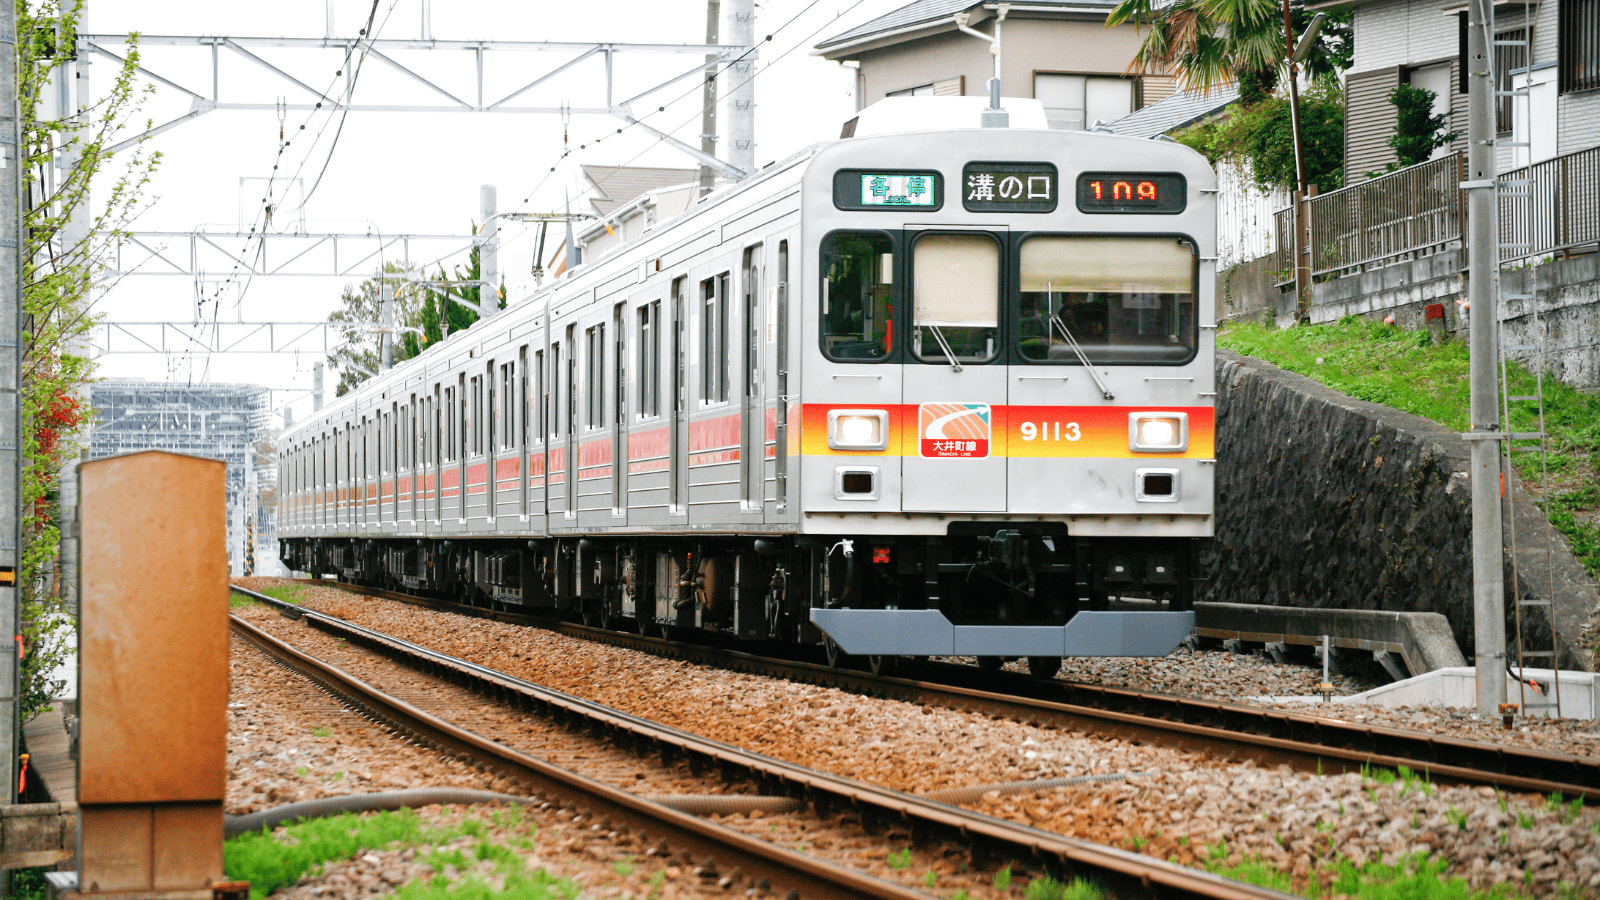 Japanese Train Carriage